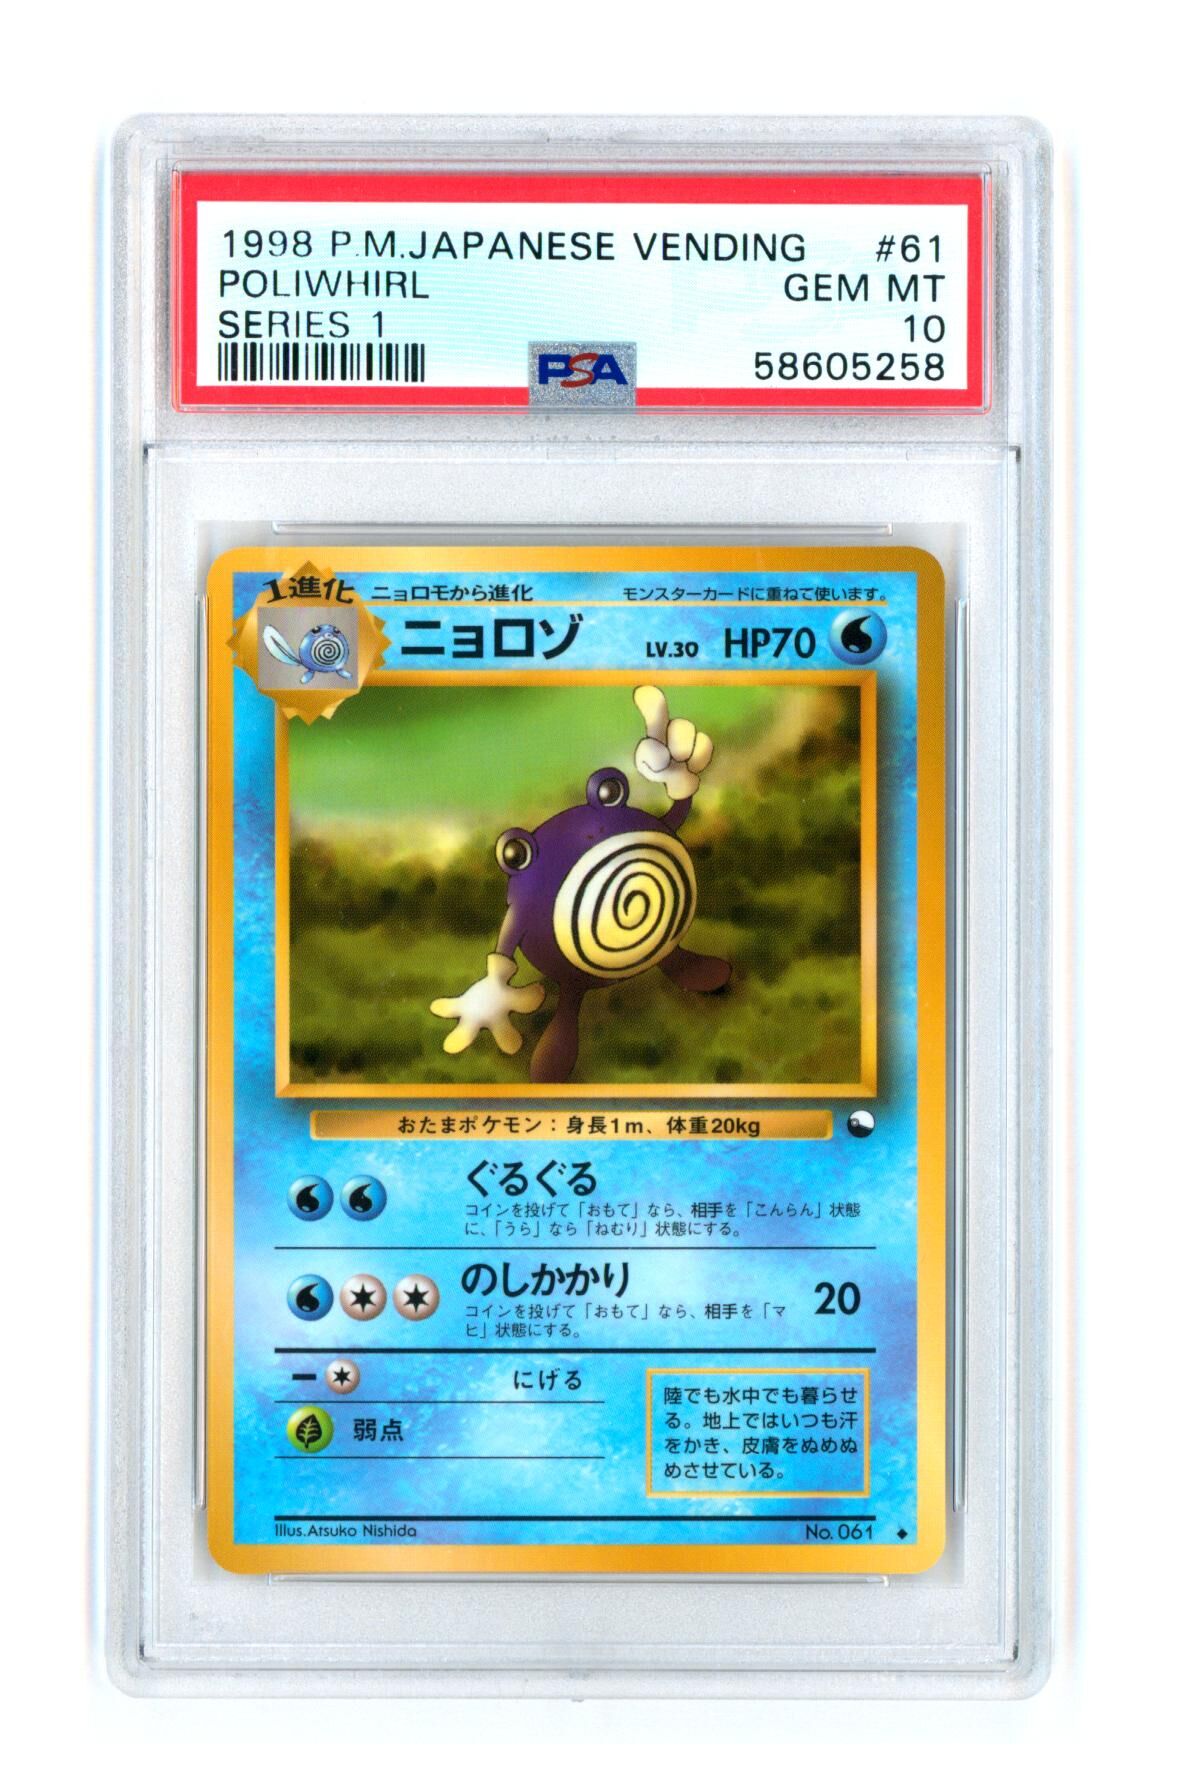 Poliwhirl #61 - Series 1 - Japanese Vending - PSA 10 GEM MT - Pokémon